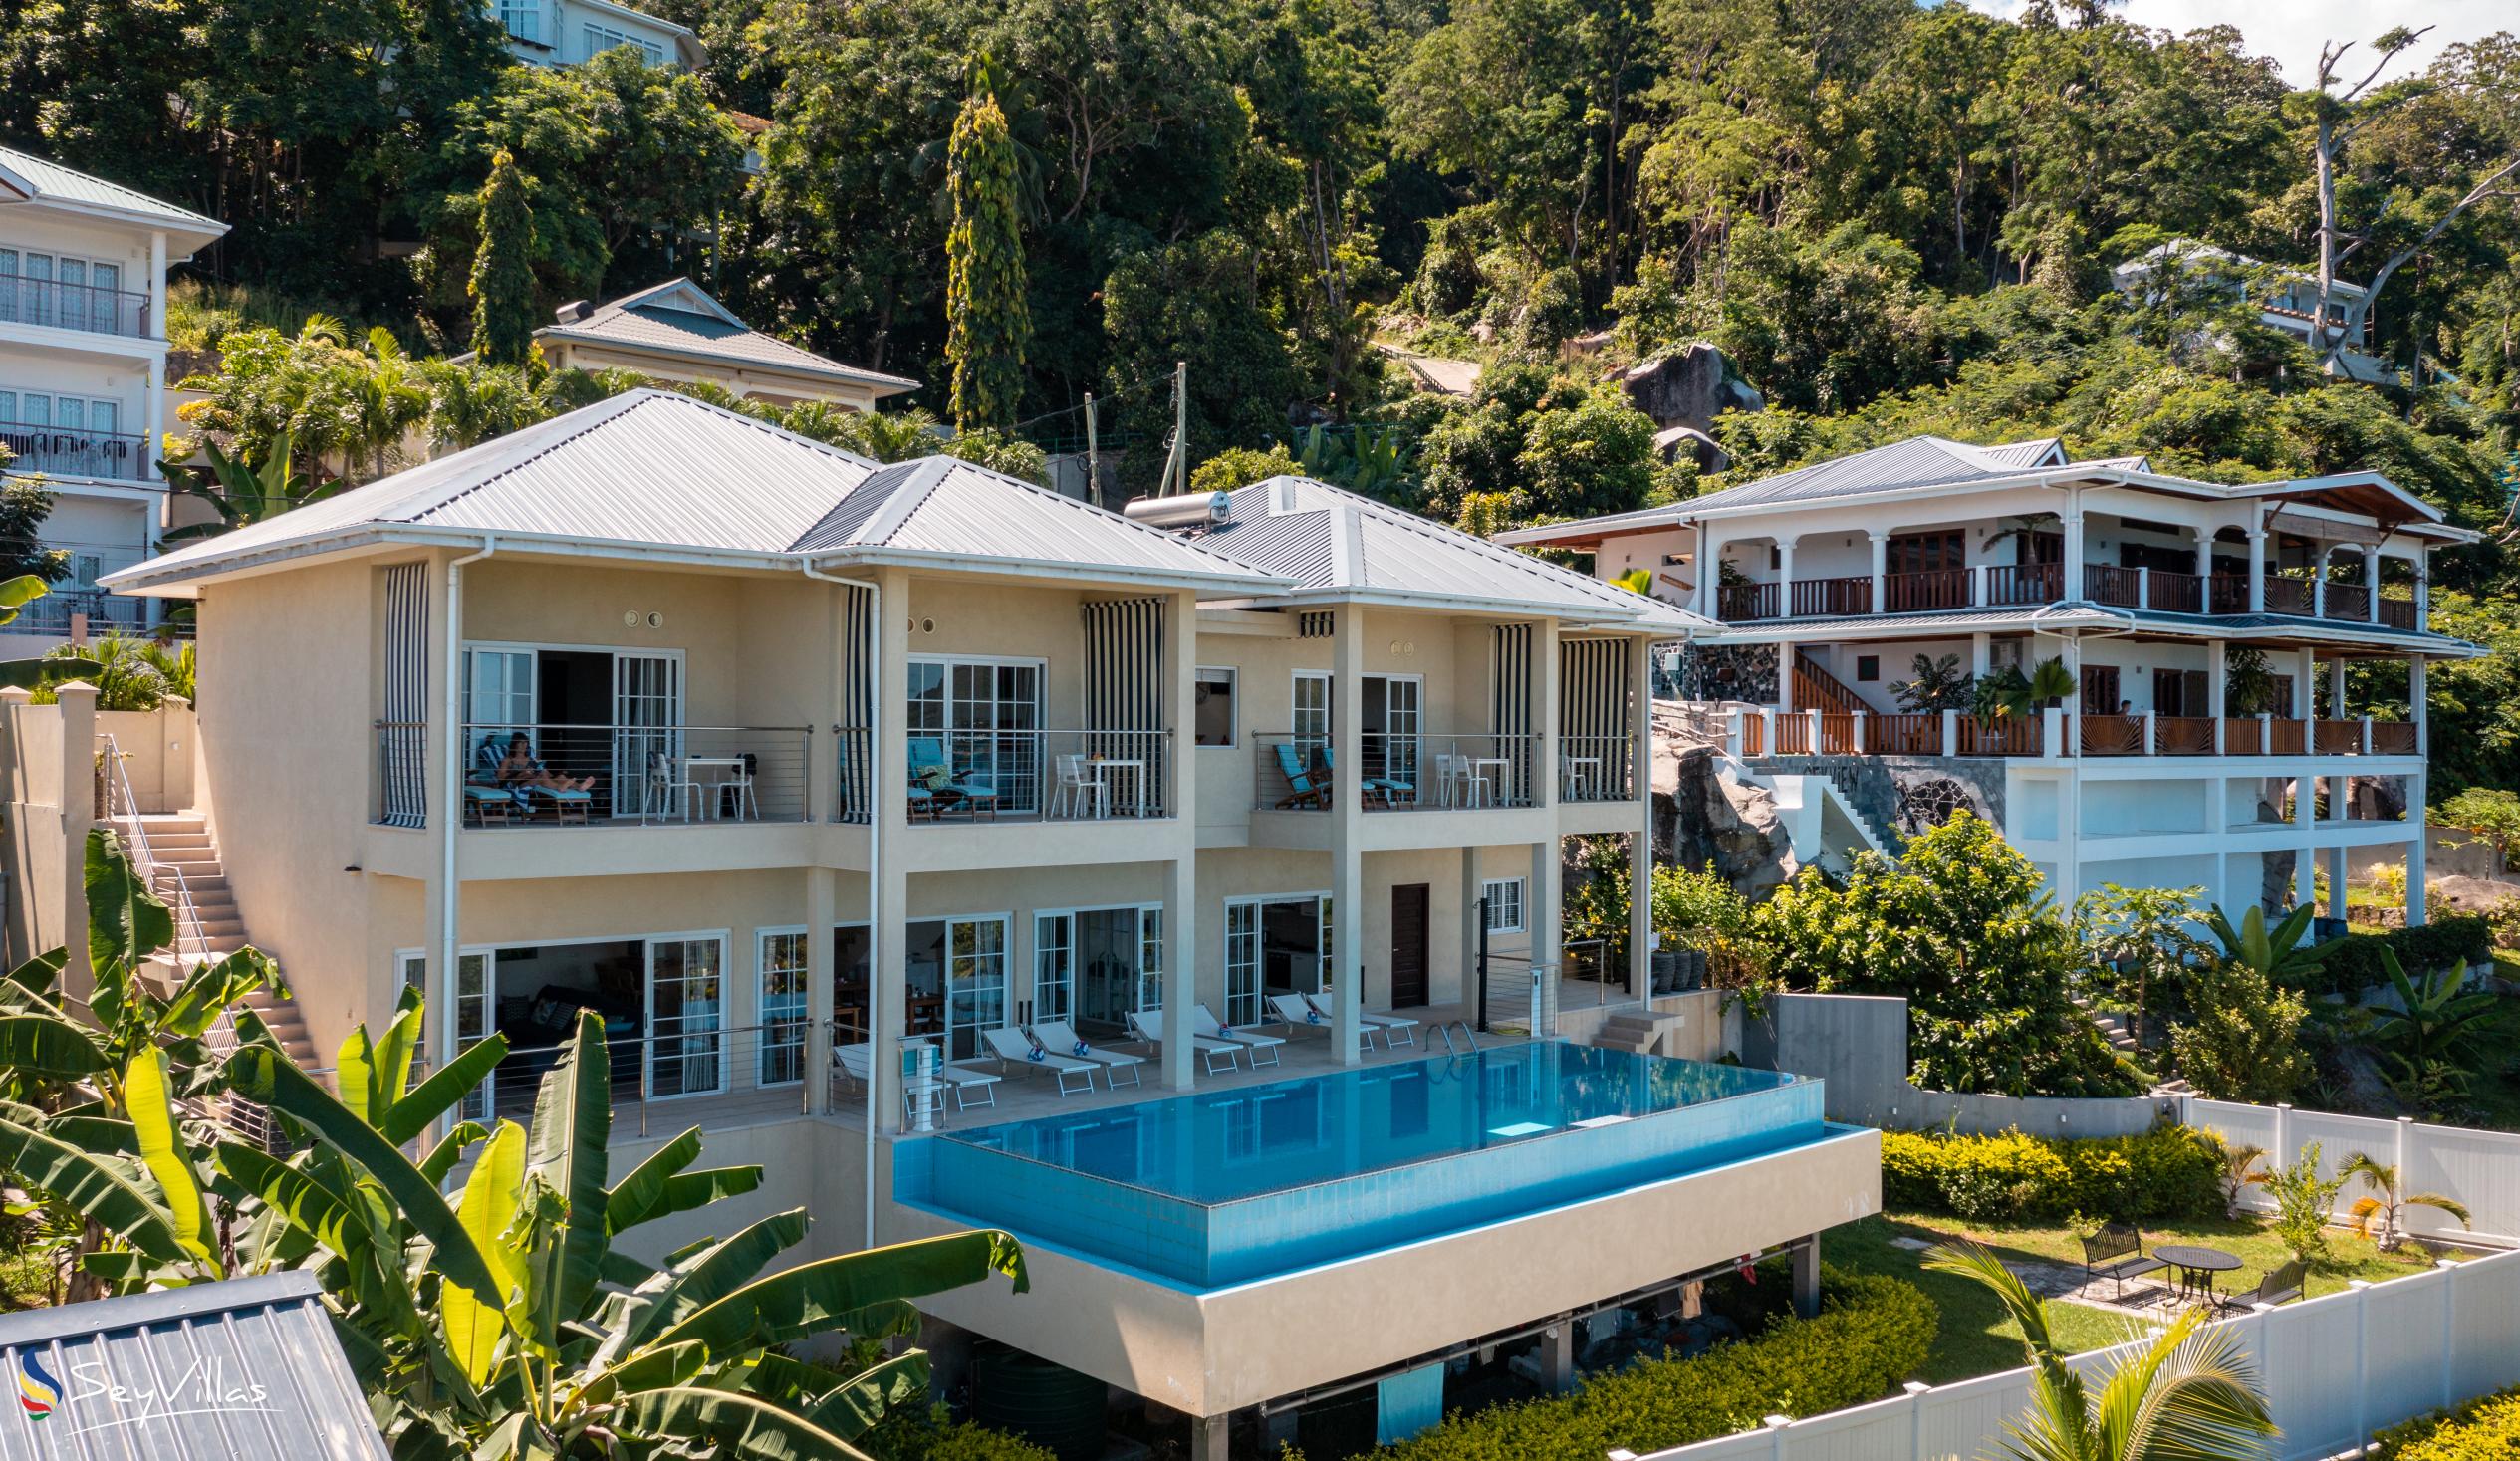 Photo 2: Villa Panoramic Seaview - Outdoor area - Mahé (Seychelles)